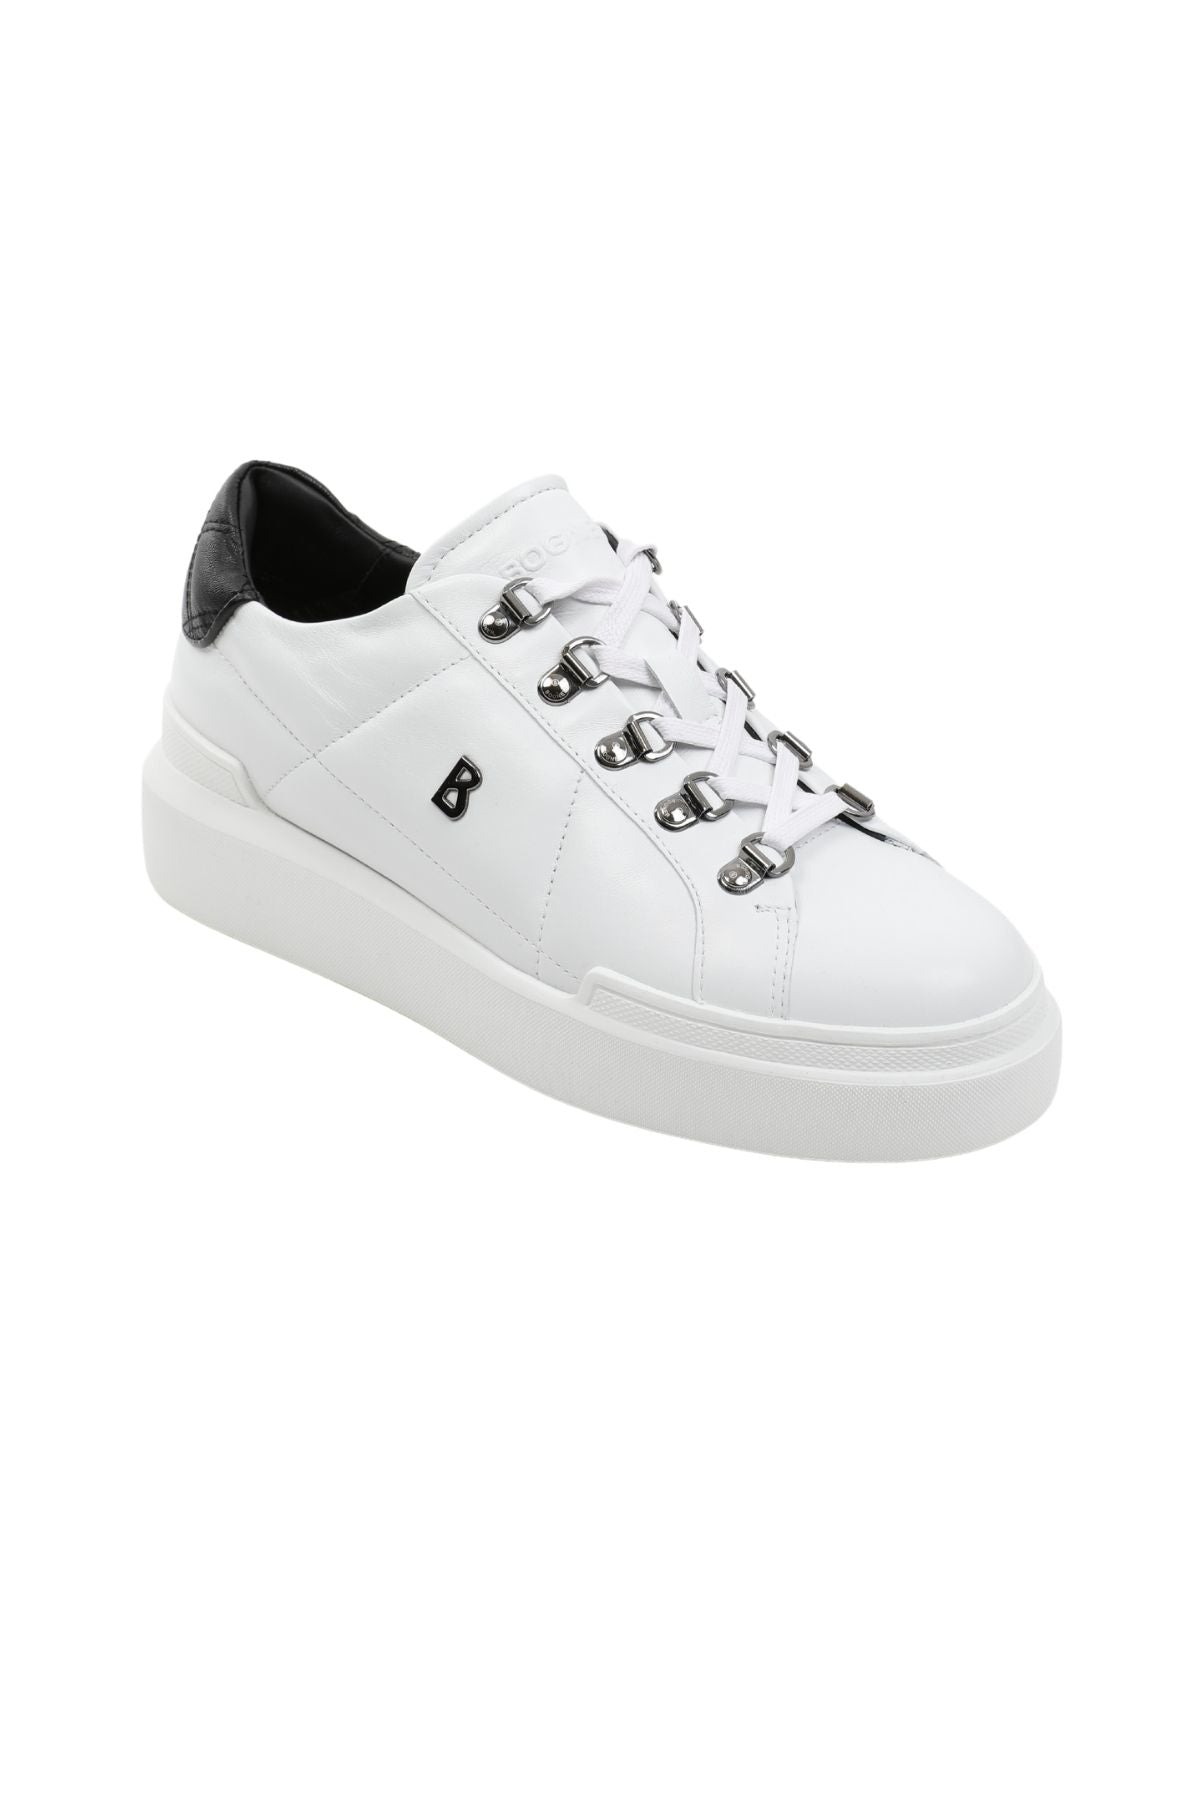 Bogner Hollywood Deri Kapitone Sneaker Ayakkabı-Libas Trendy Fashion Store